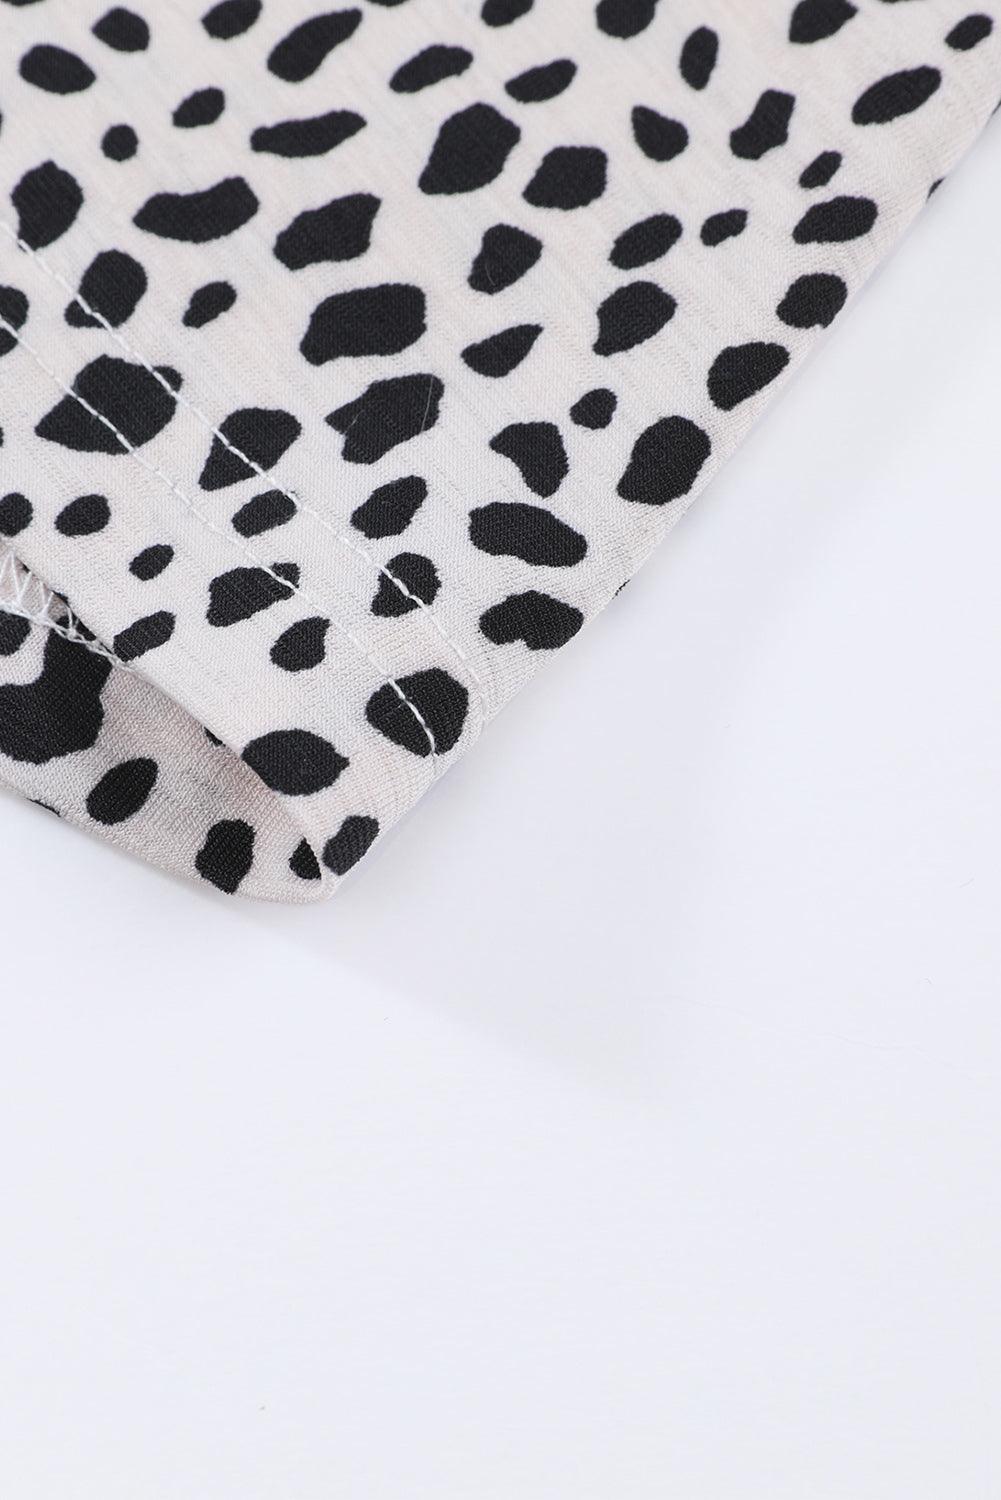 Cheetah Print O-neck Short Sleeve T Shirt - L & M Kee, LLC